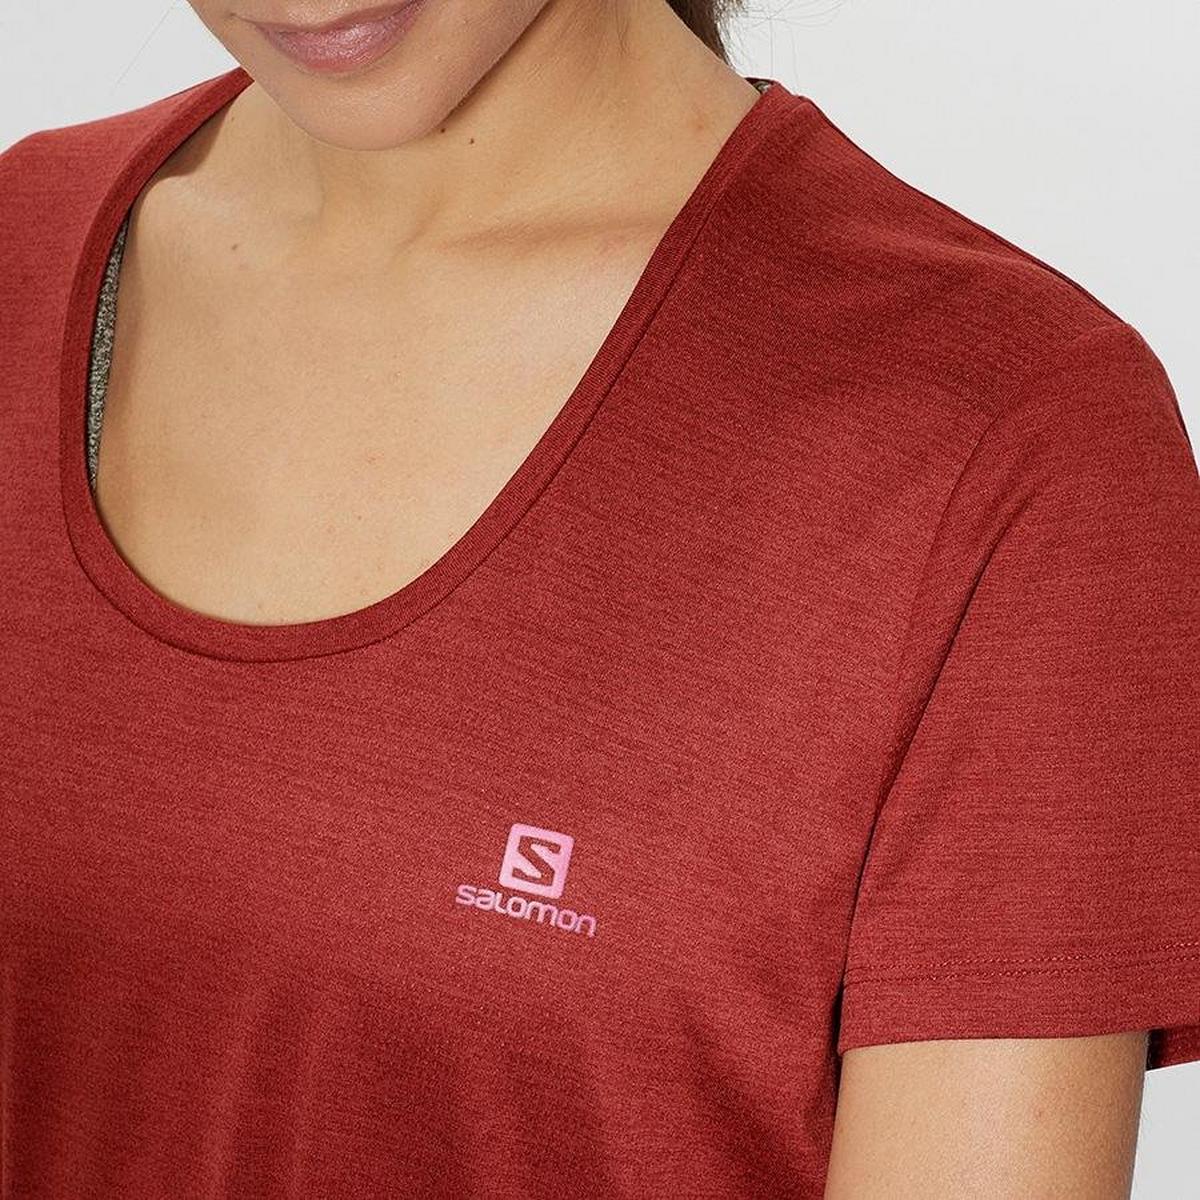 Salomon Women's Salomon Agile SS T-Shirt - Red